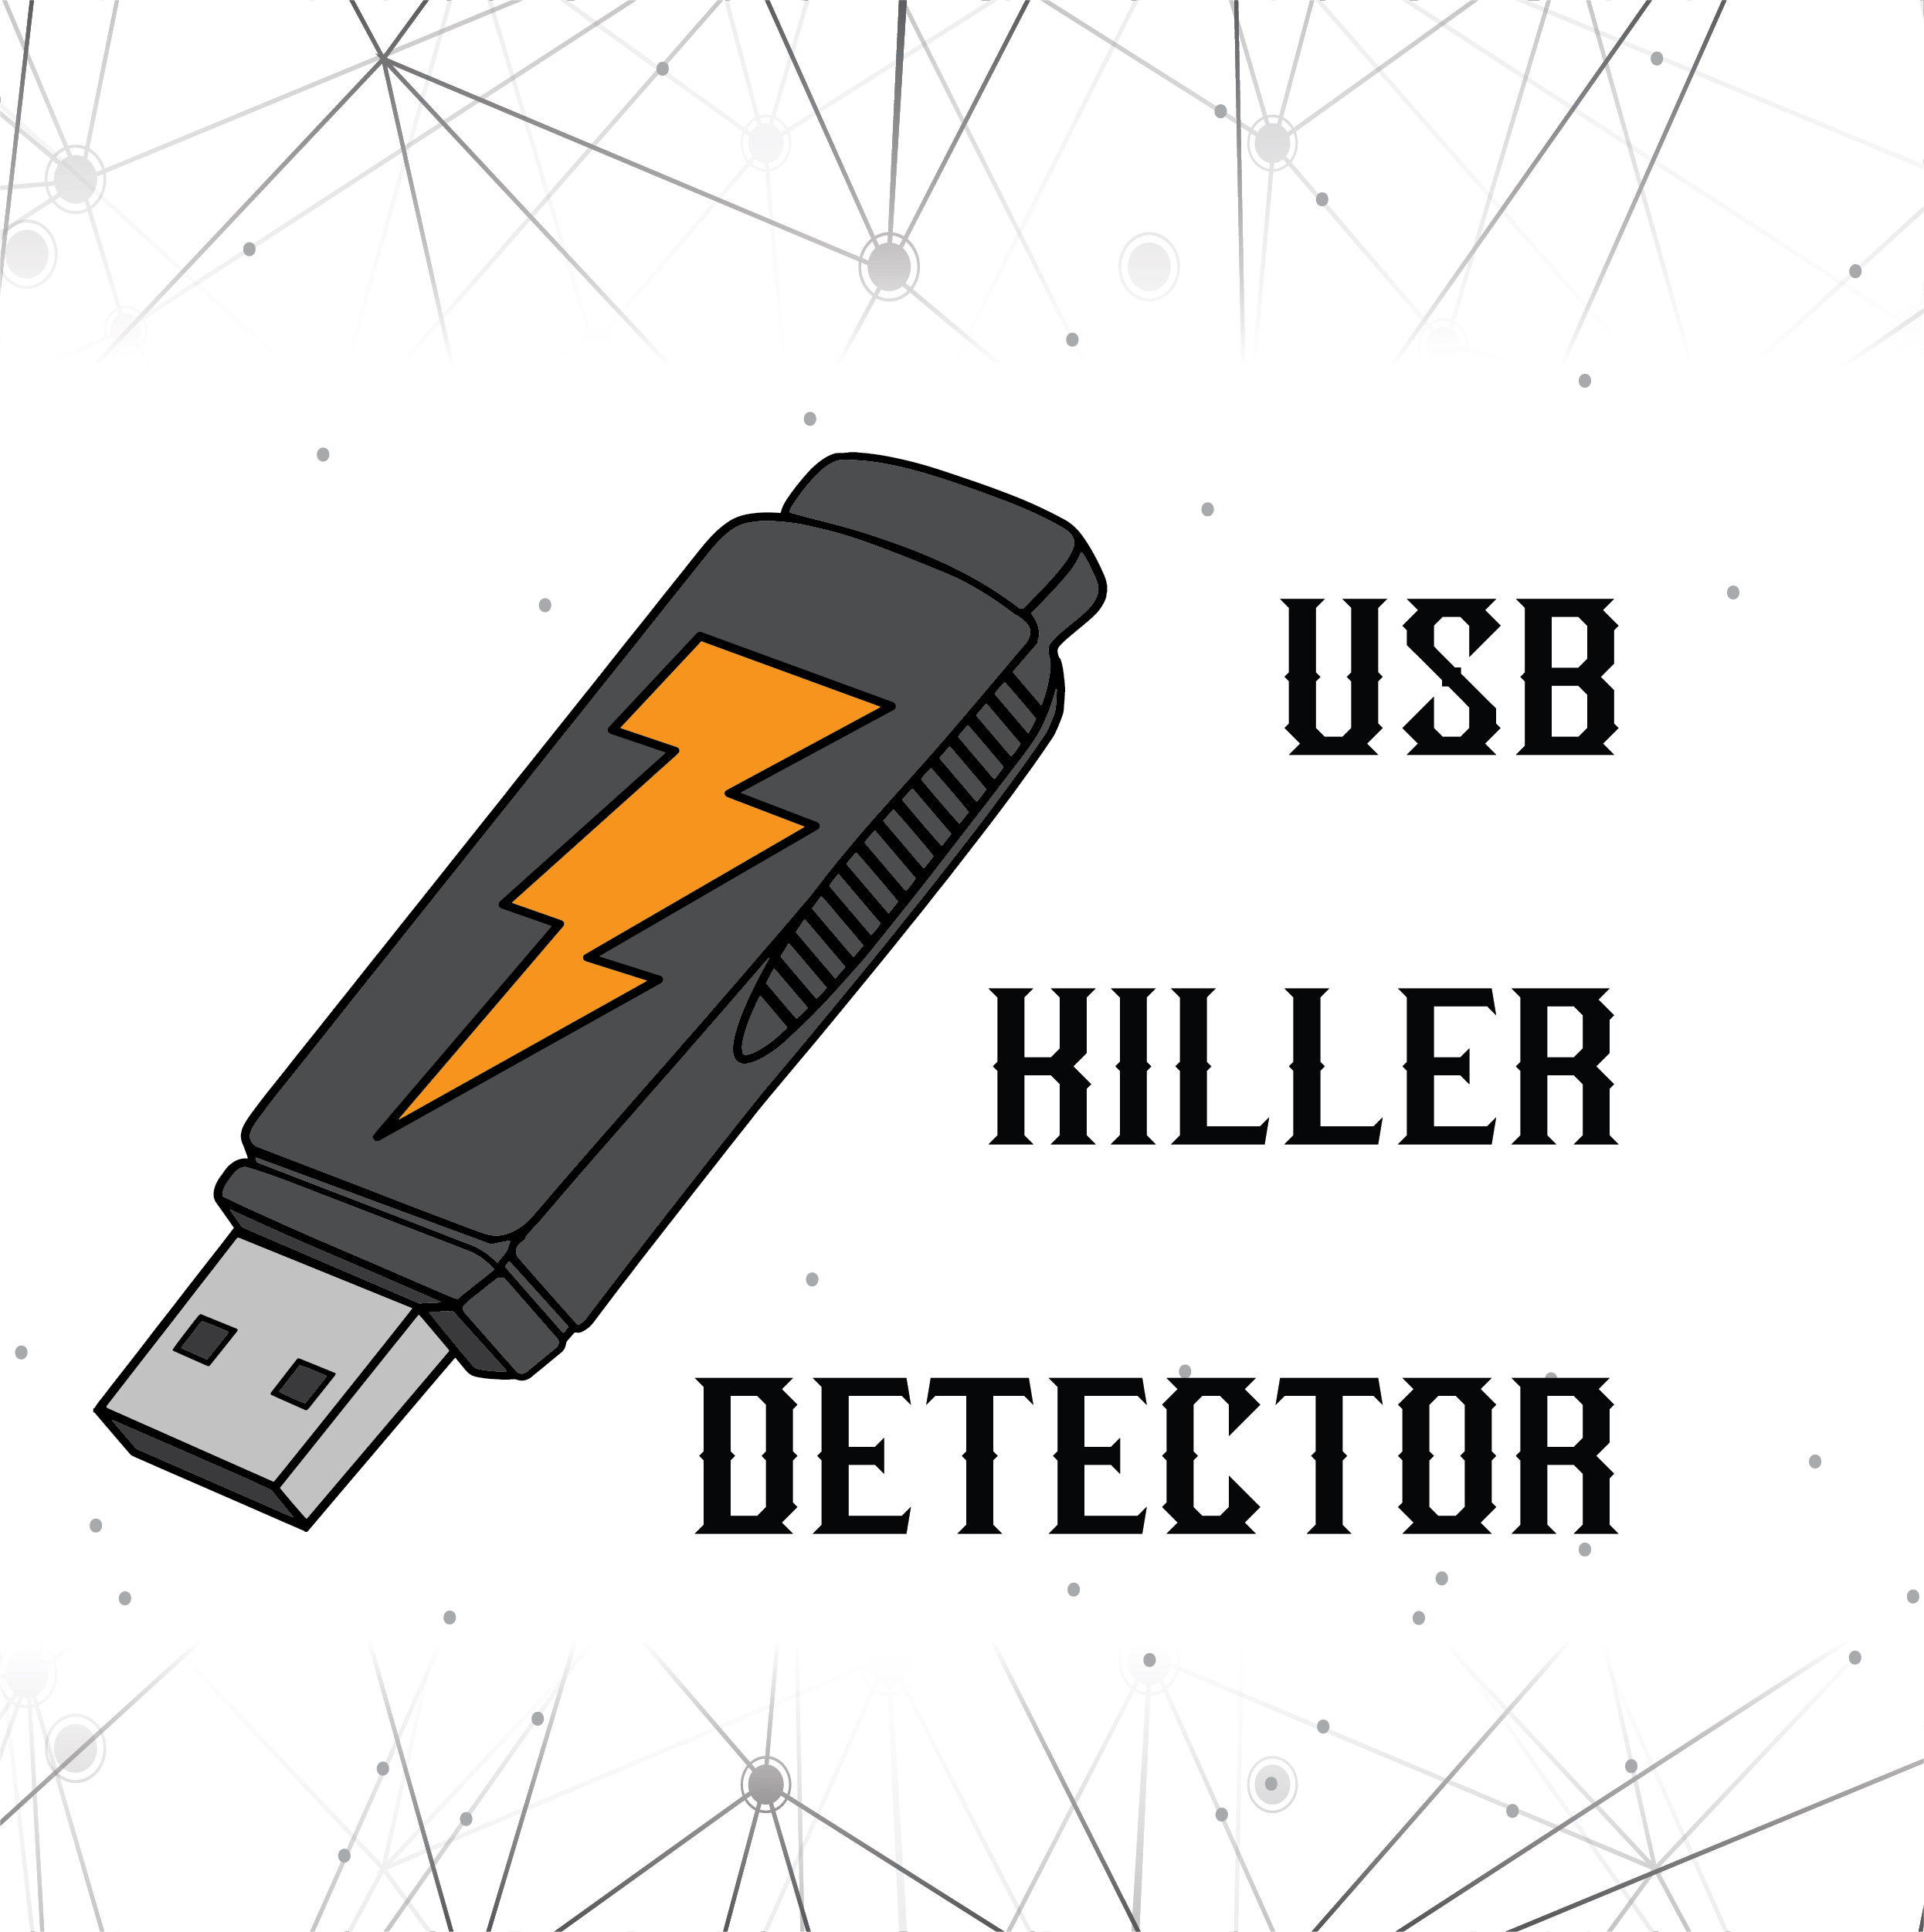 How to detect a USB killer - Quora